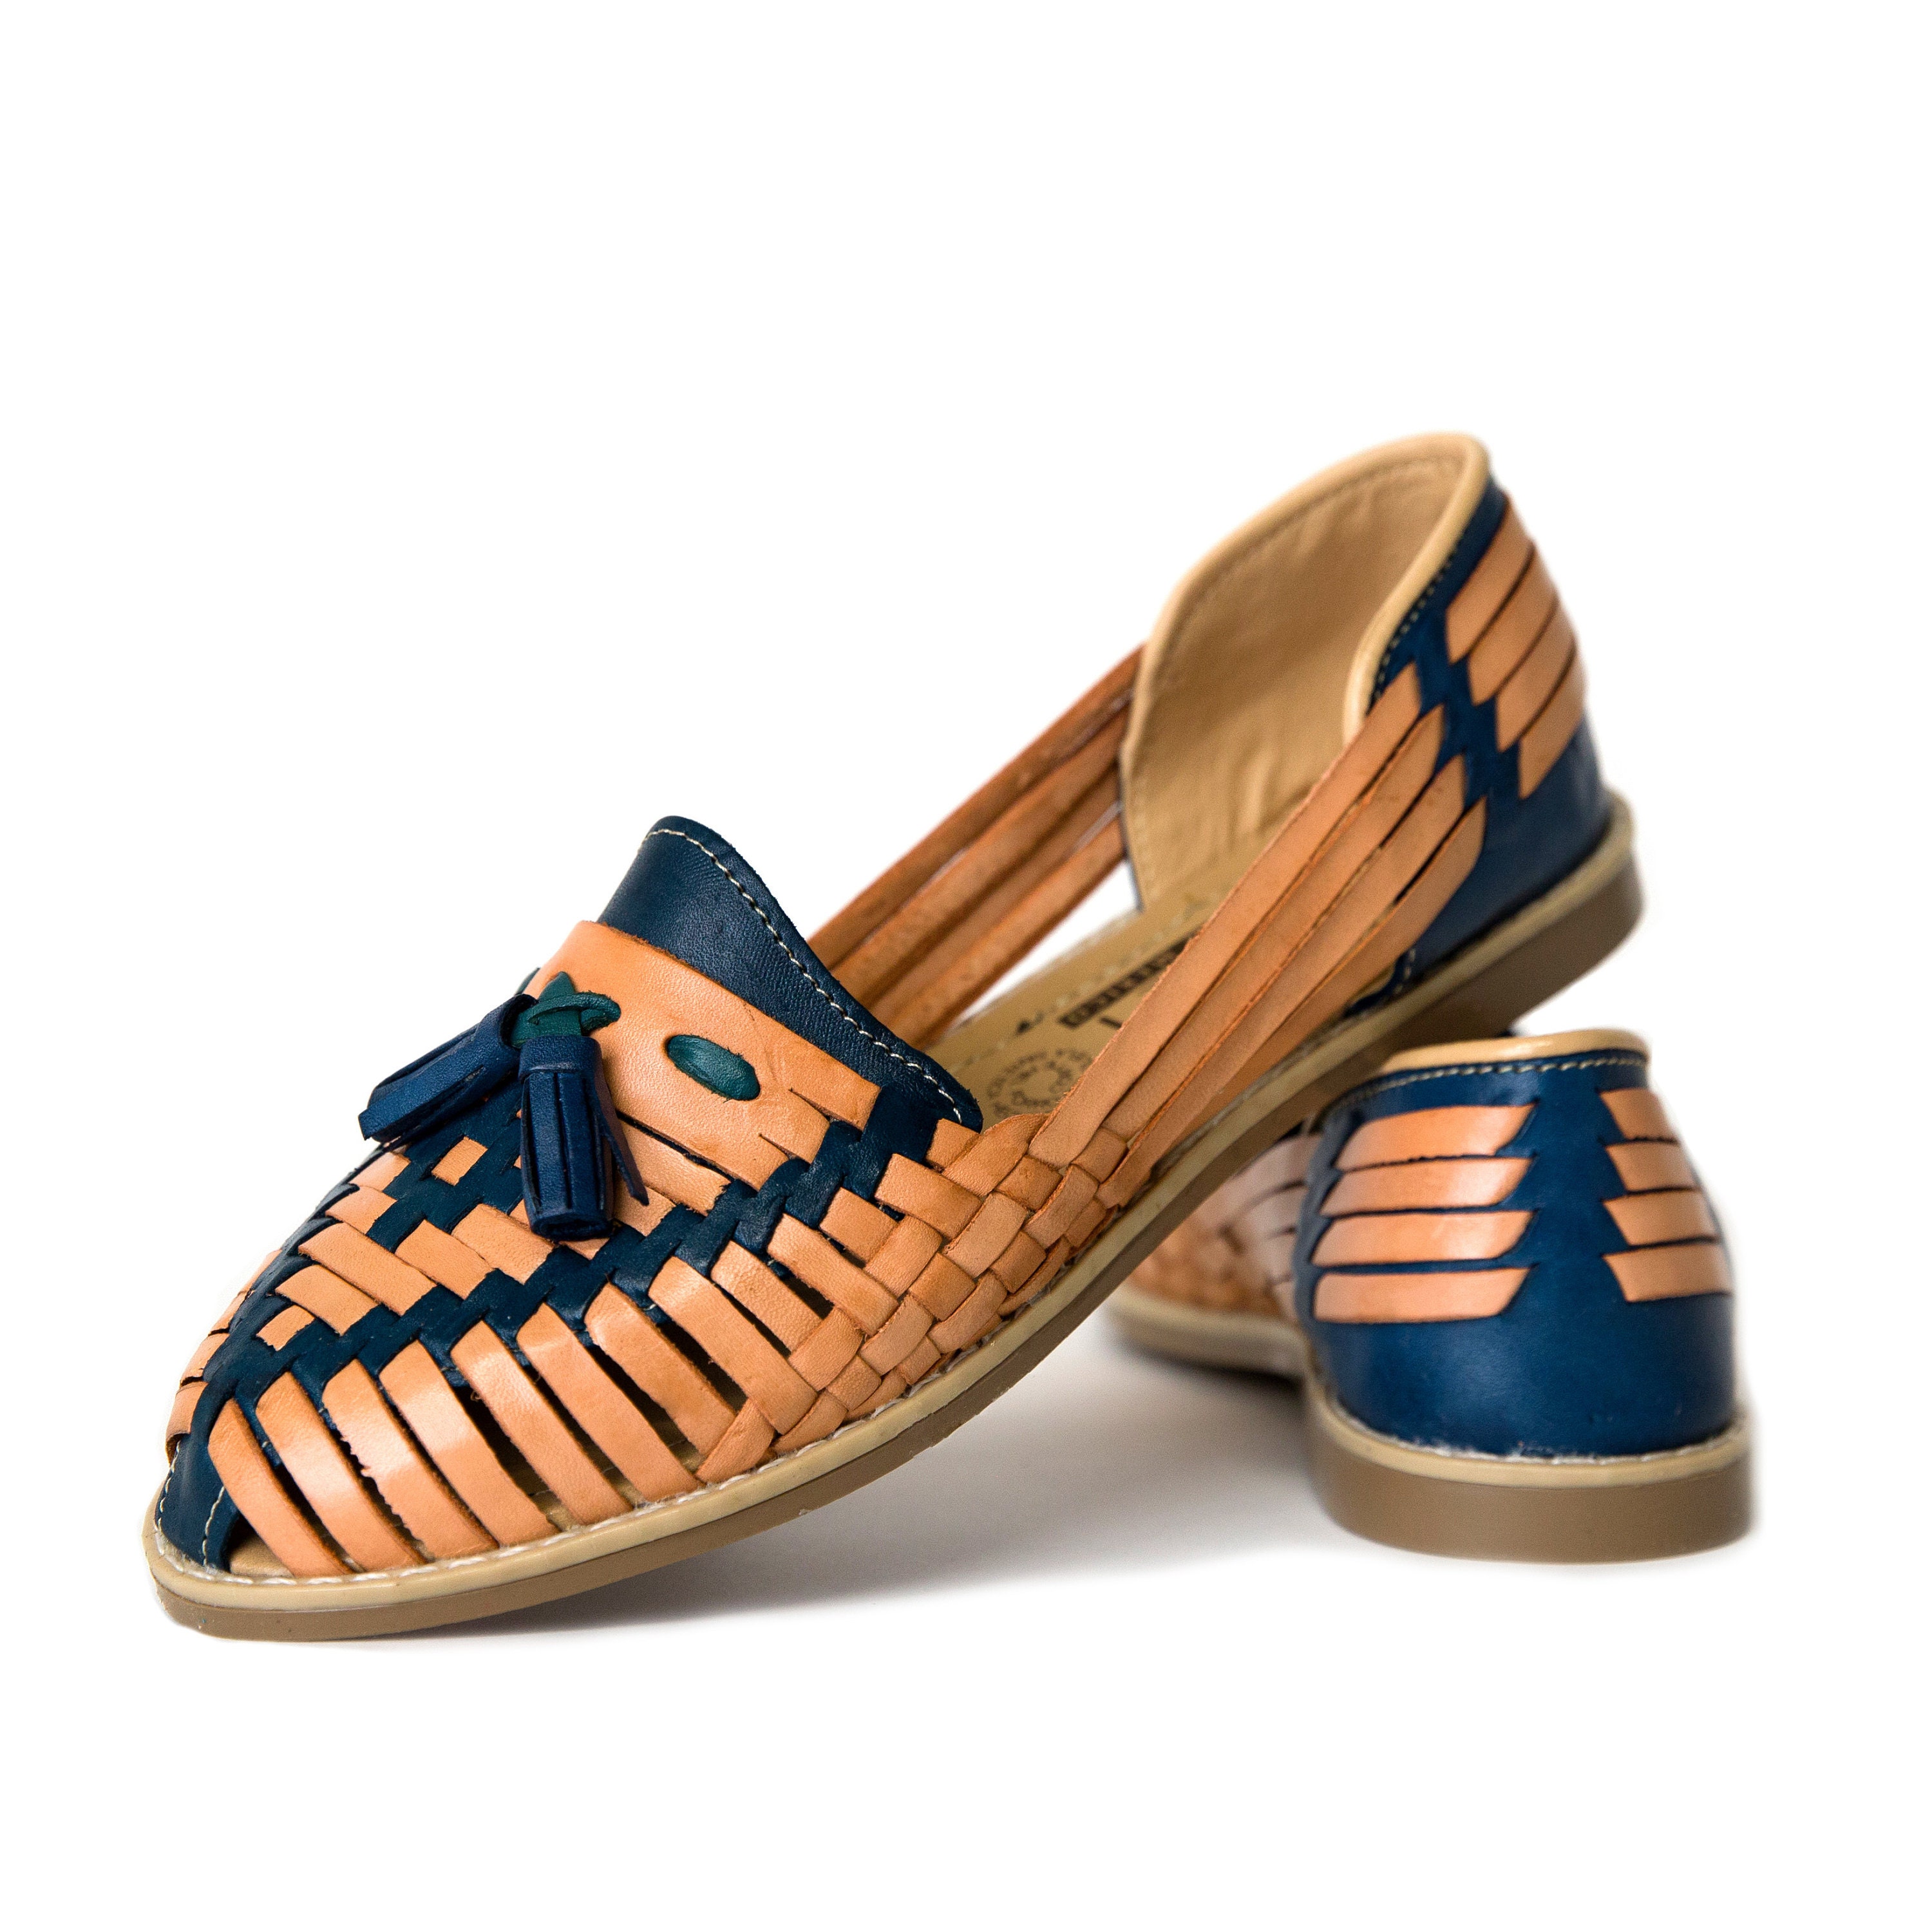 Women's Multicolor leather sandals Mexican huarache sandals. Schoenen damesschoenen Sandalen Huaraches 